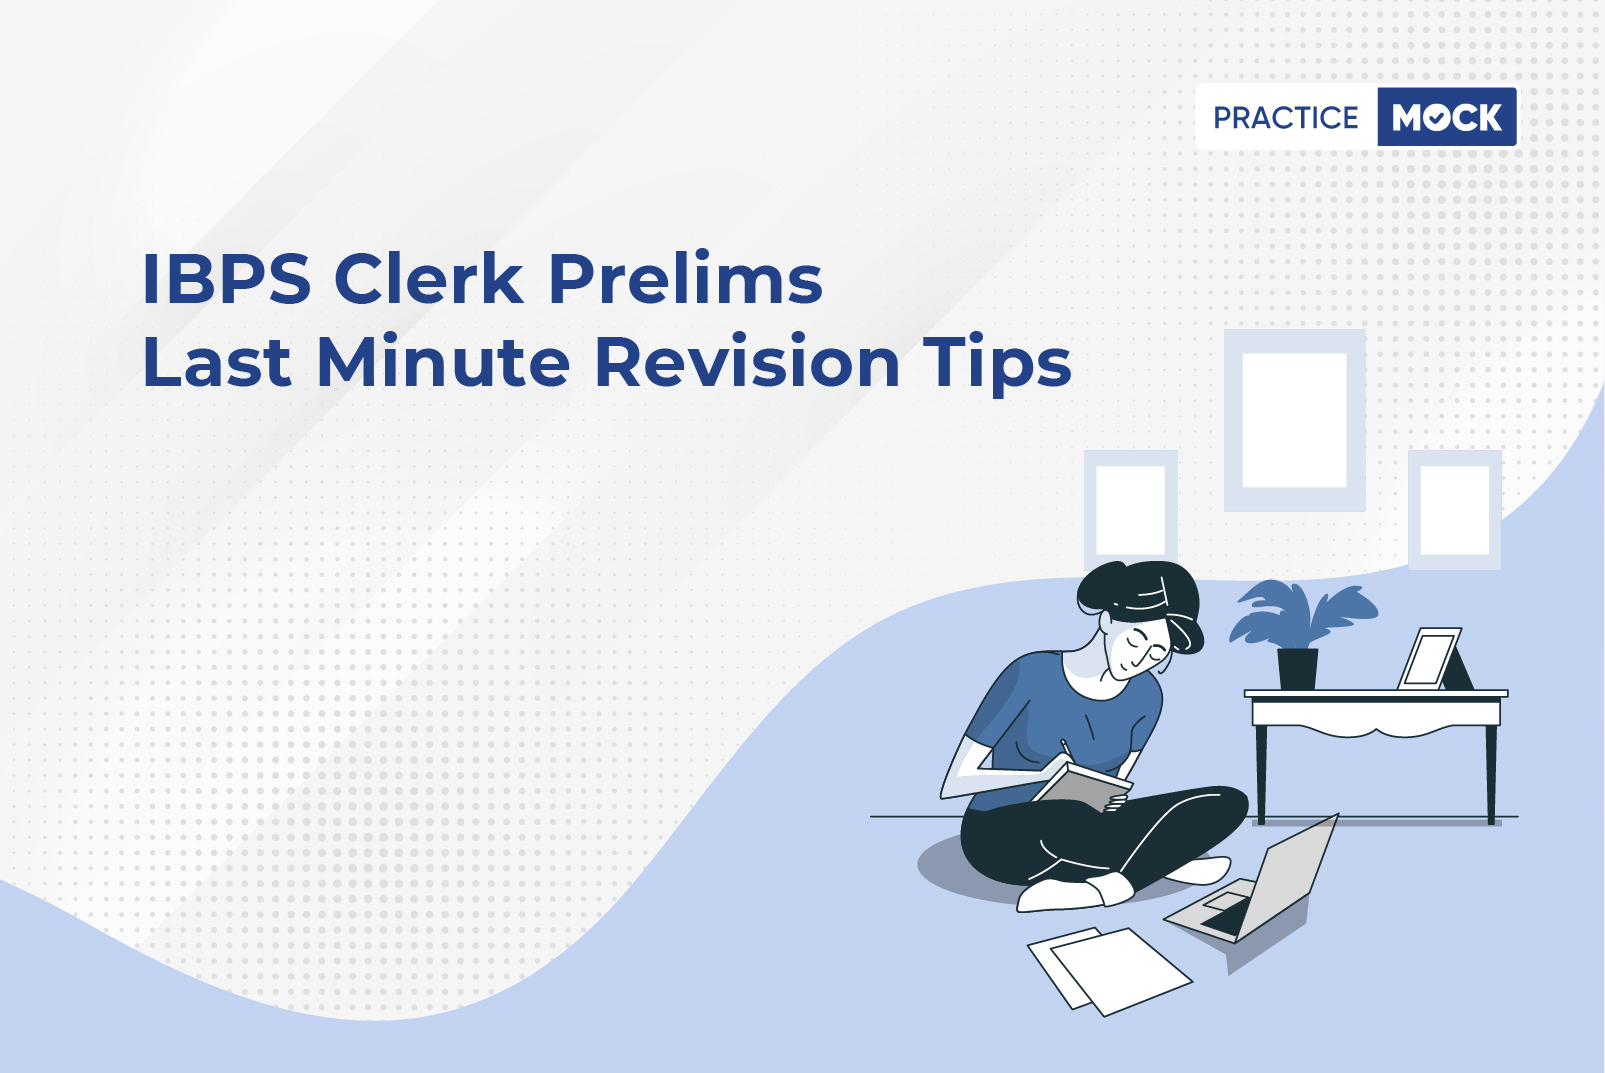 IBPS Clerk Prelims Revision Tips